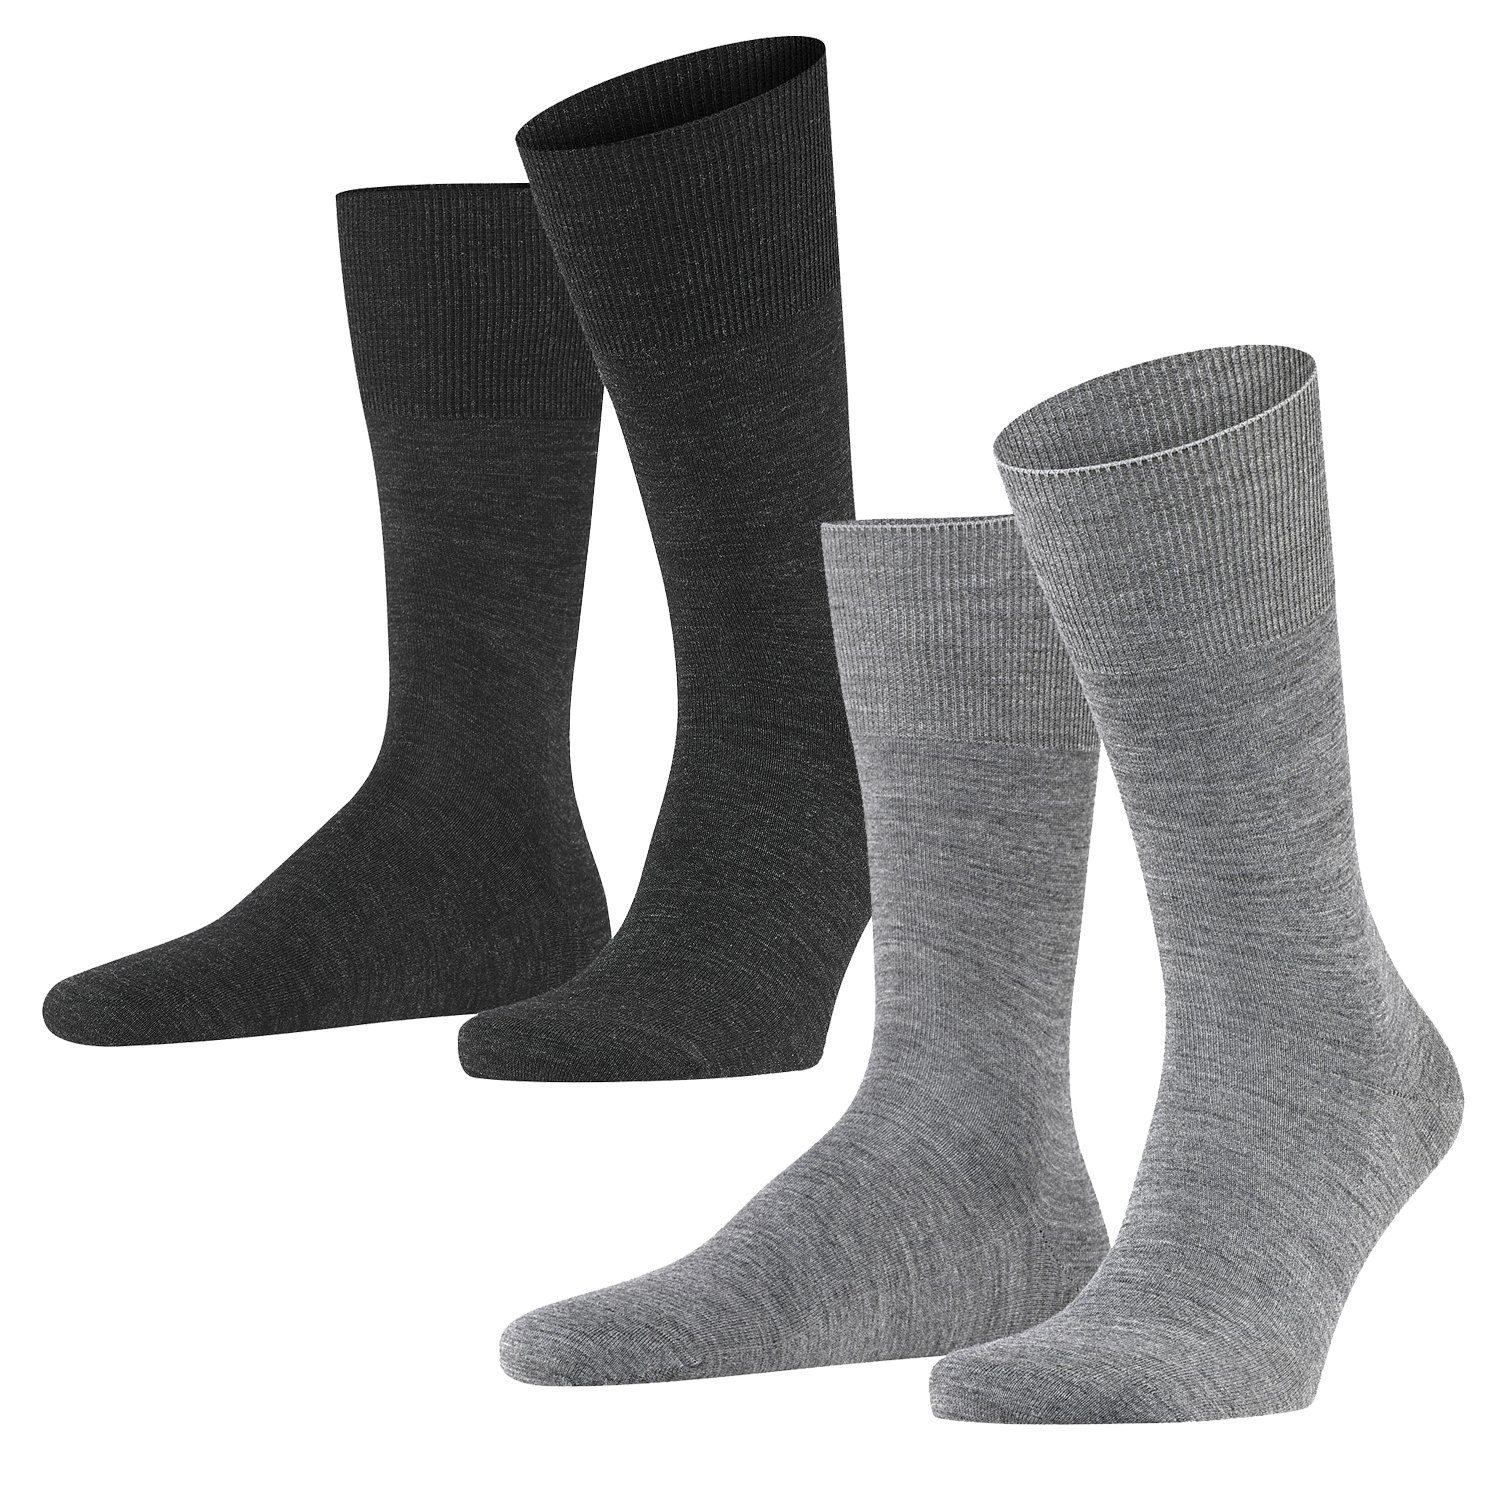 FALKE Socken SOX Company Herren Socken Wolle 2er Pack (2er Pack, 2 Paar)  guter Tragekomfort, echte druckfreie Spitzennaht, Einsatz feiner Wolle